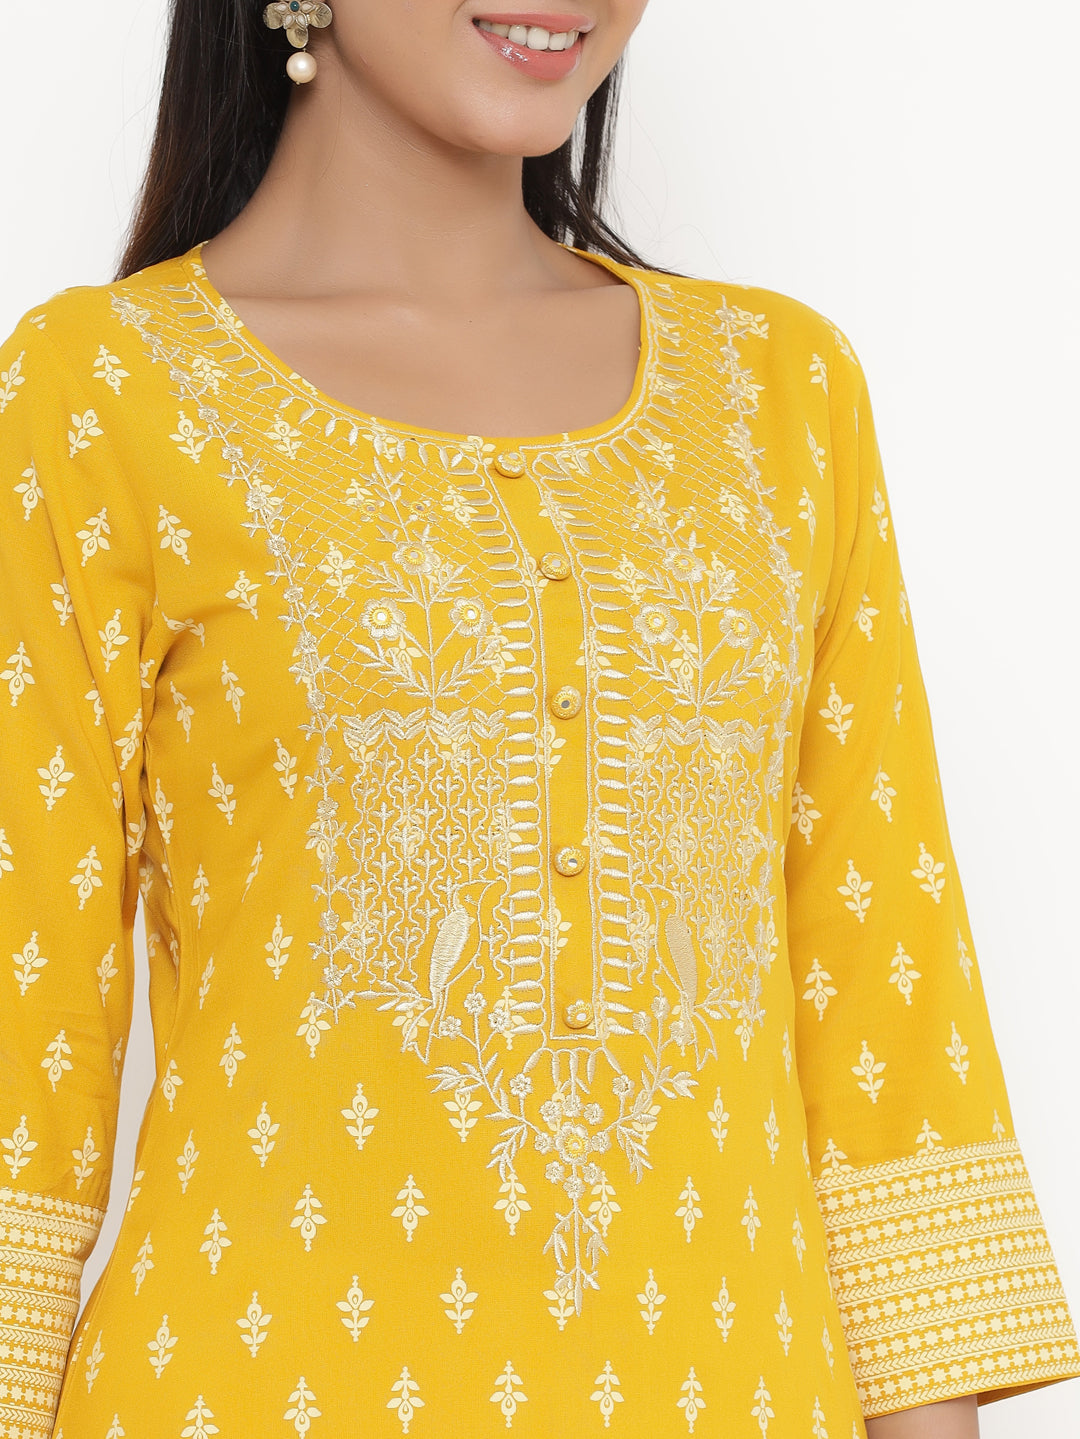 Women's Self Desgin Rayon Fabric Straight Kurta Yellow Color - Kipek